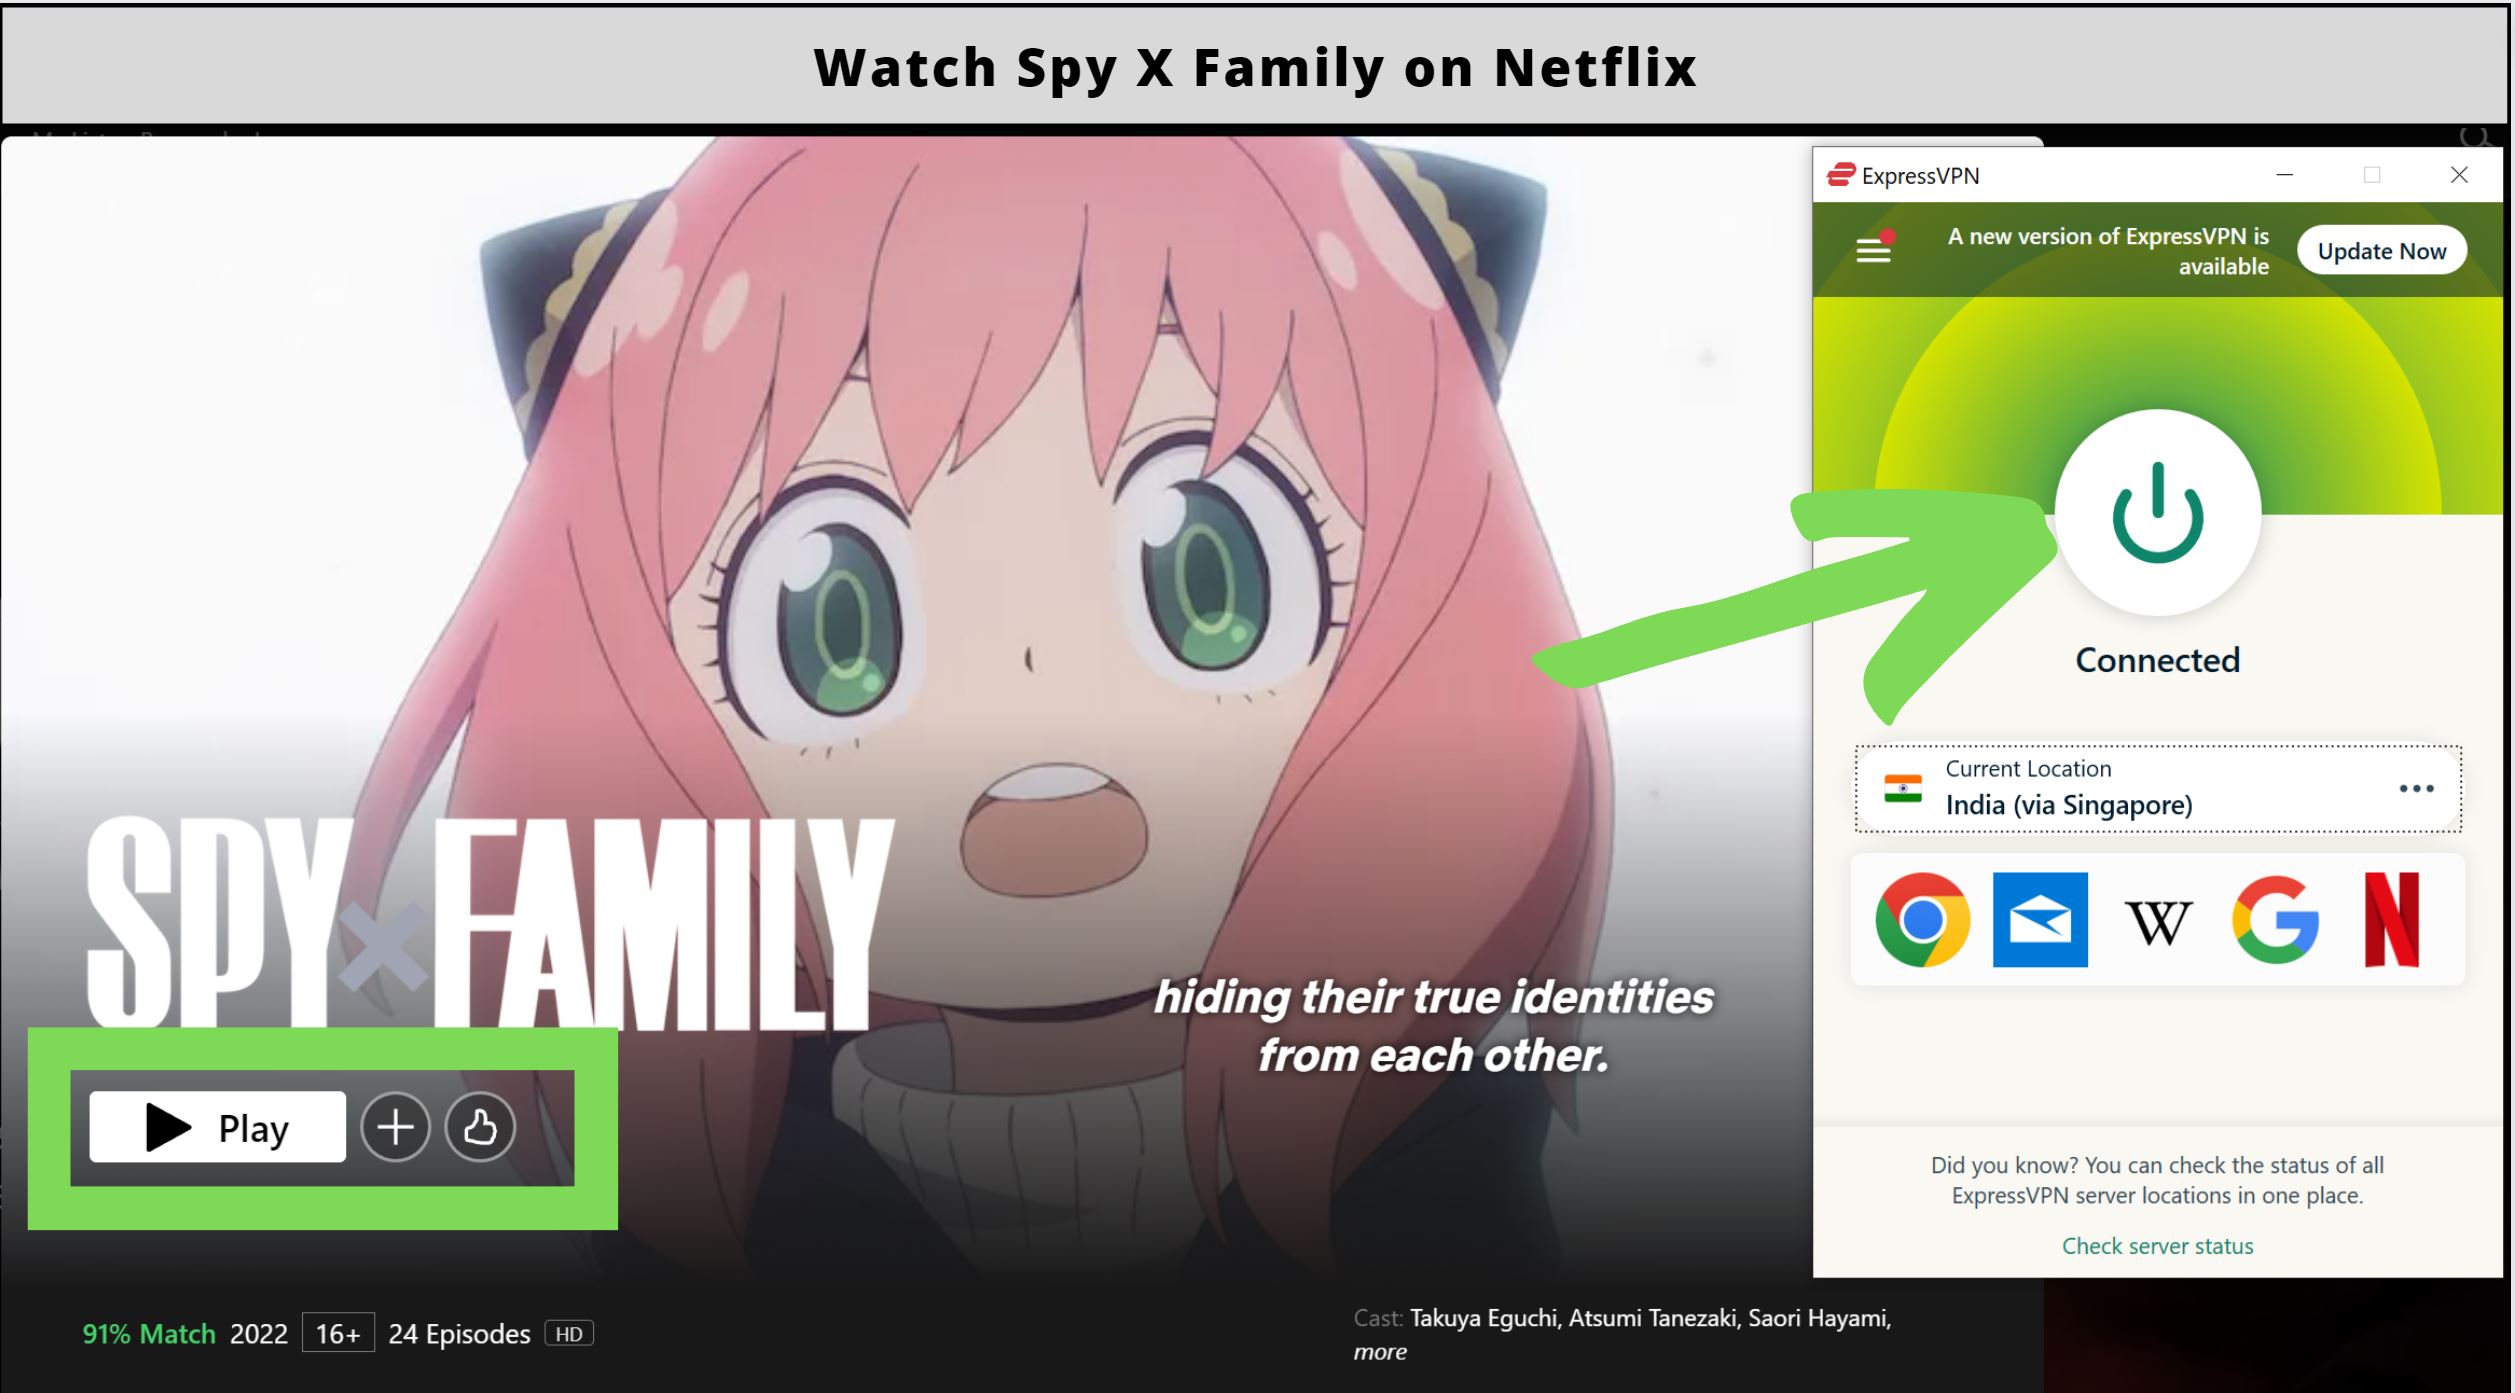 Is Spy X Family on Netflix